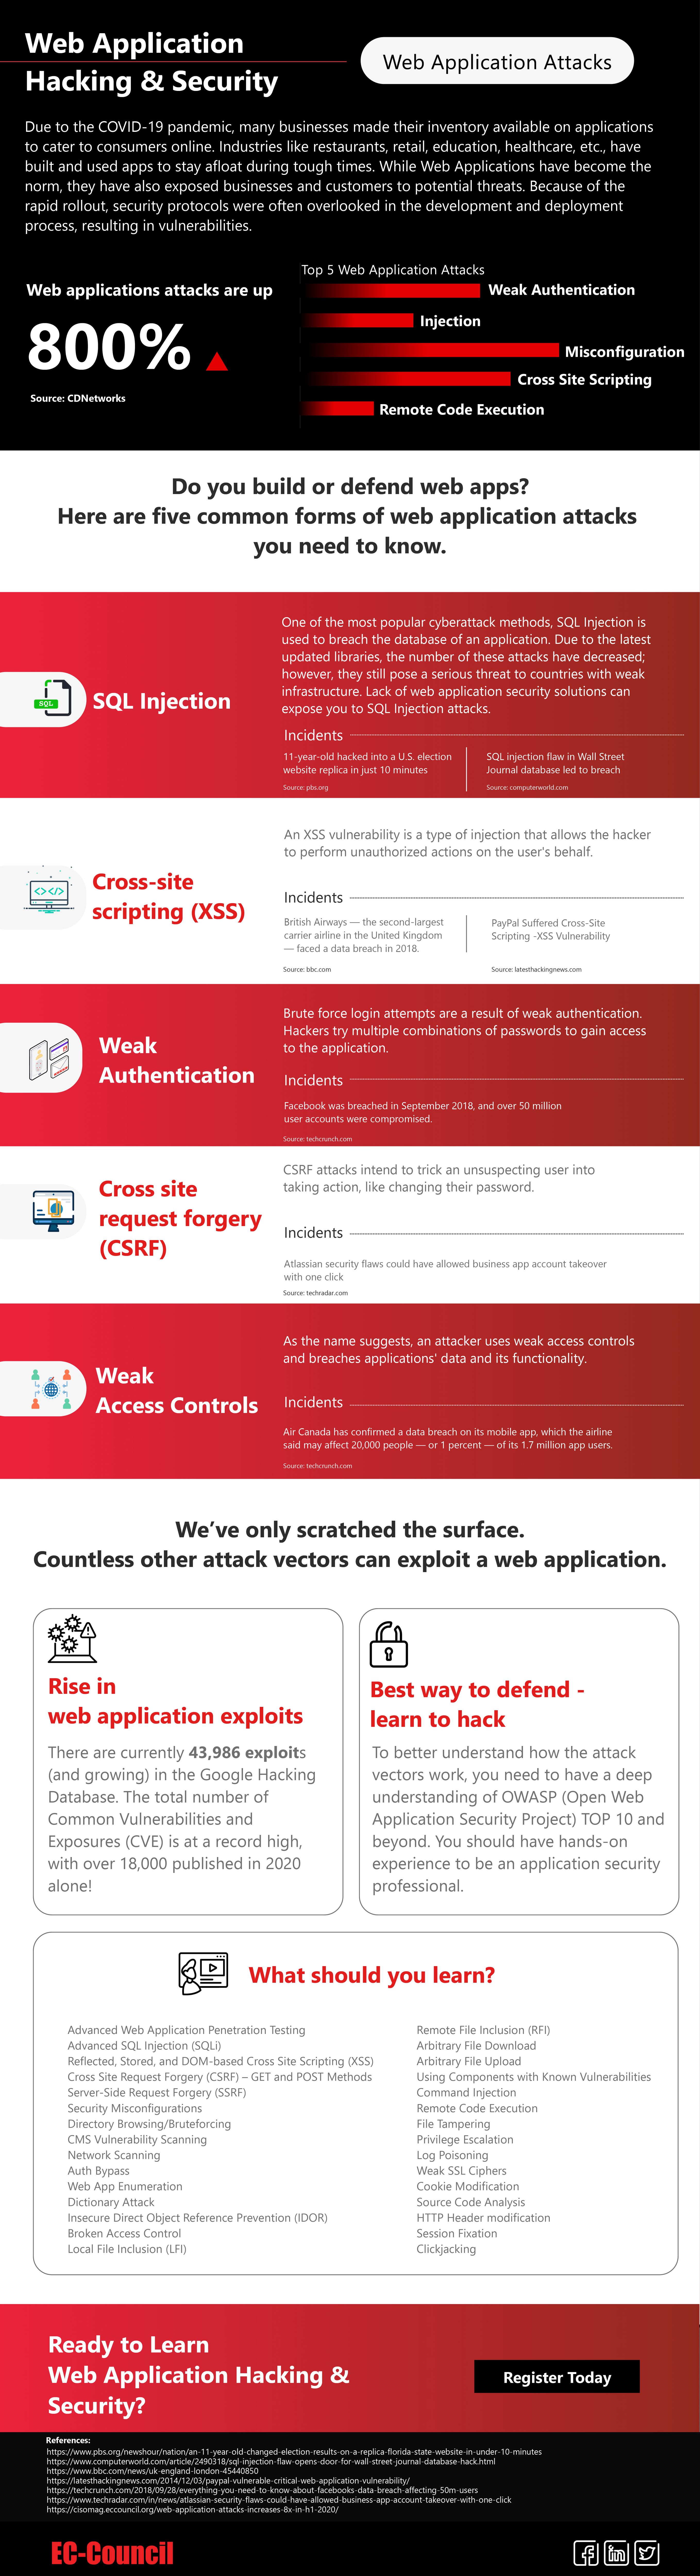 Web application attacks